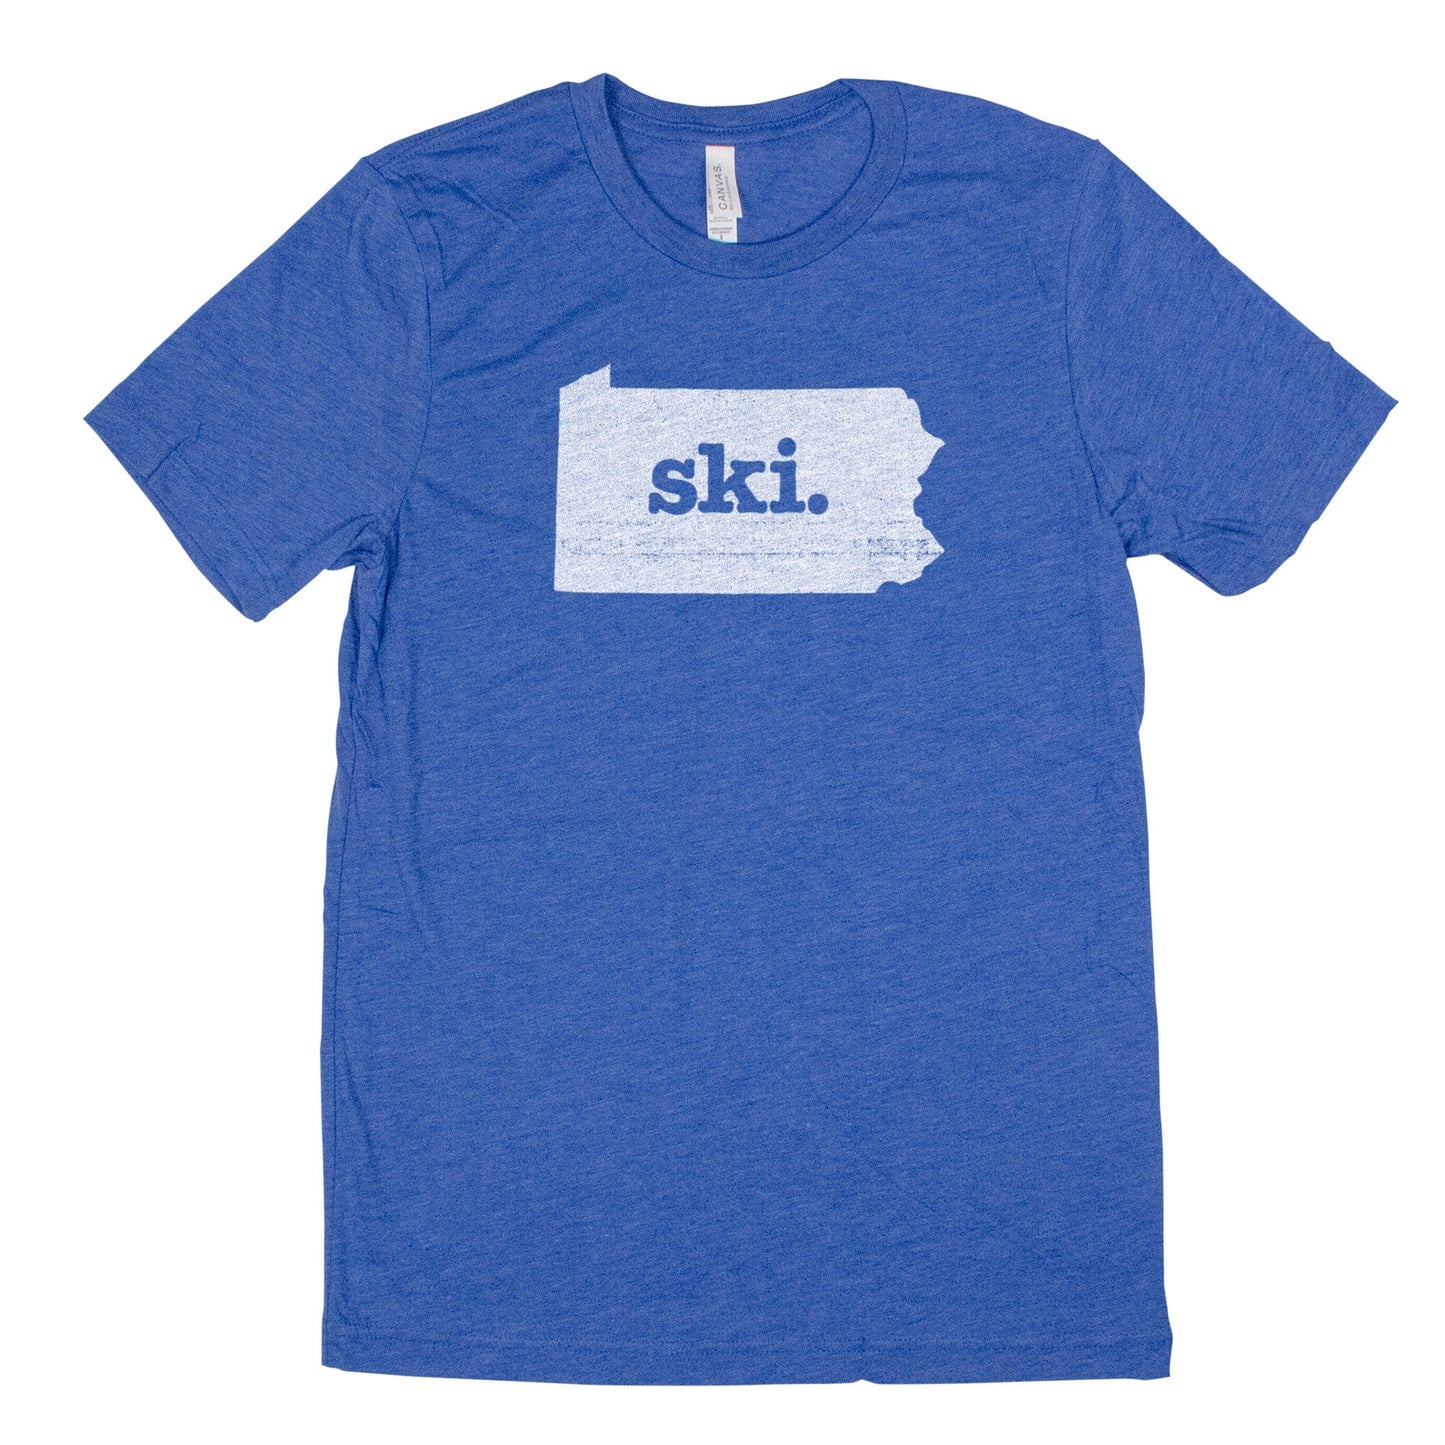 ski. Men's Unisex T-Shirt - Pennsylvania